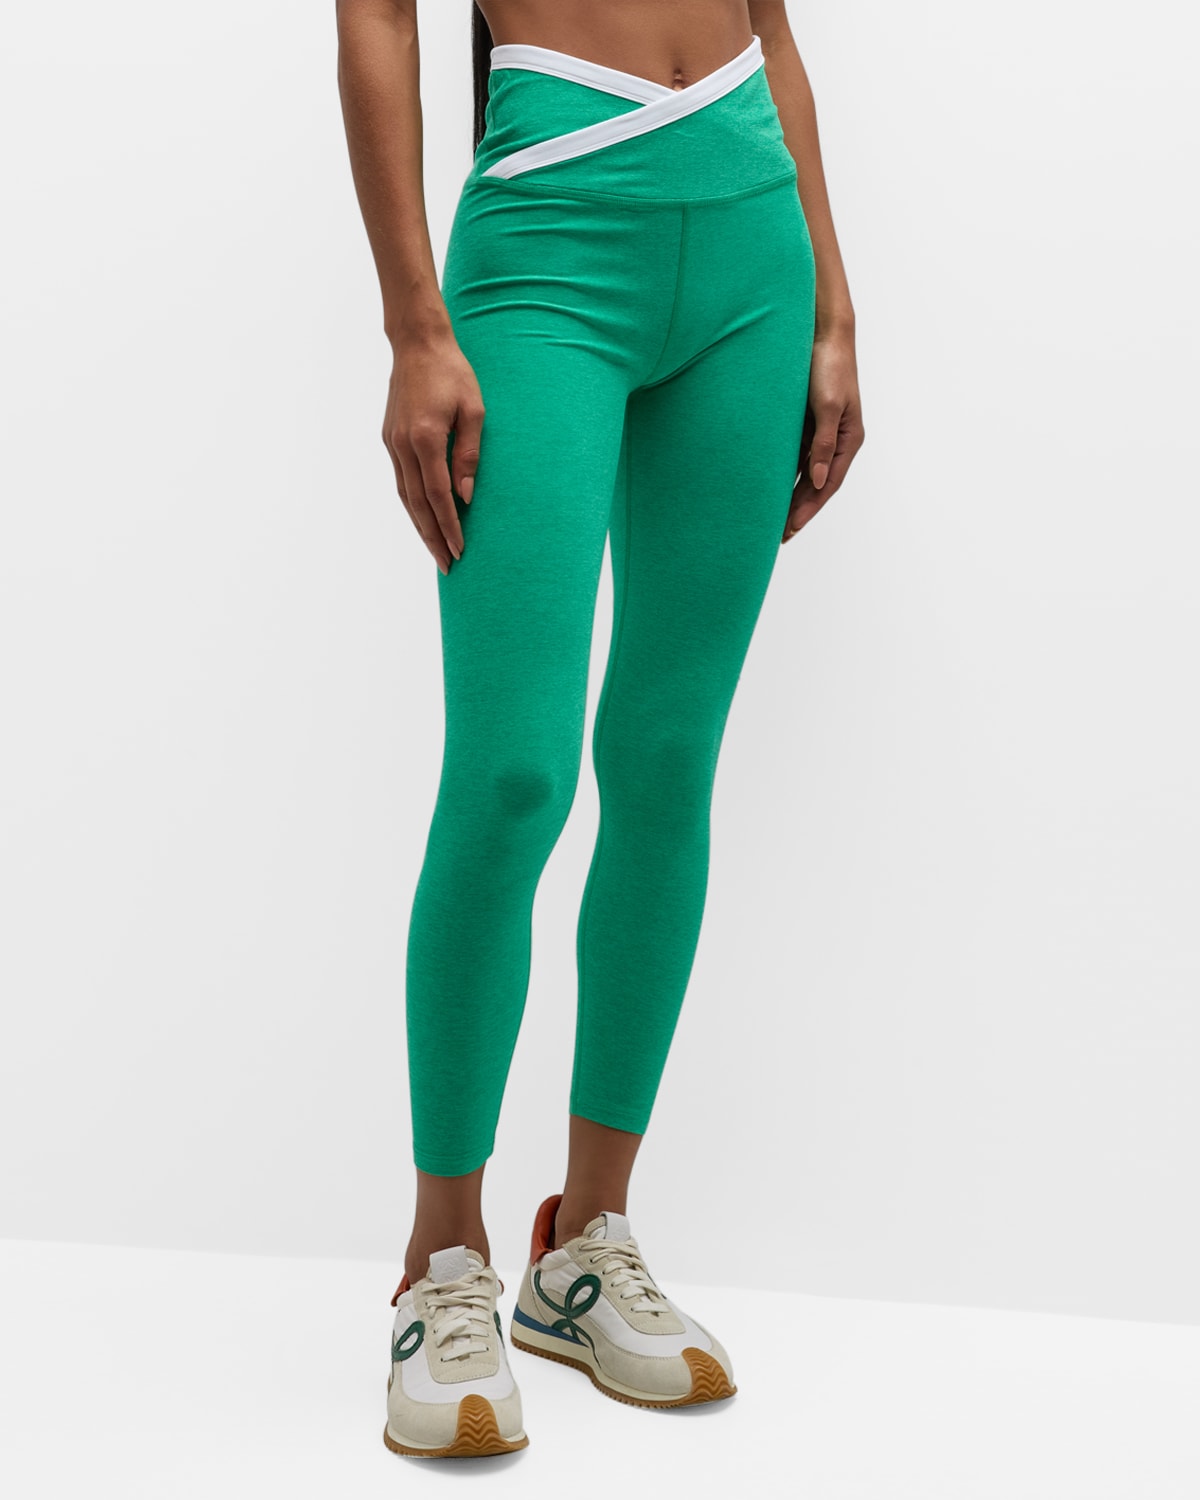 Beyond Yoga Spacedye Outlines High Waisted Midi Legging in Green